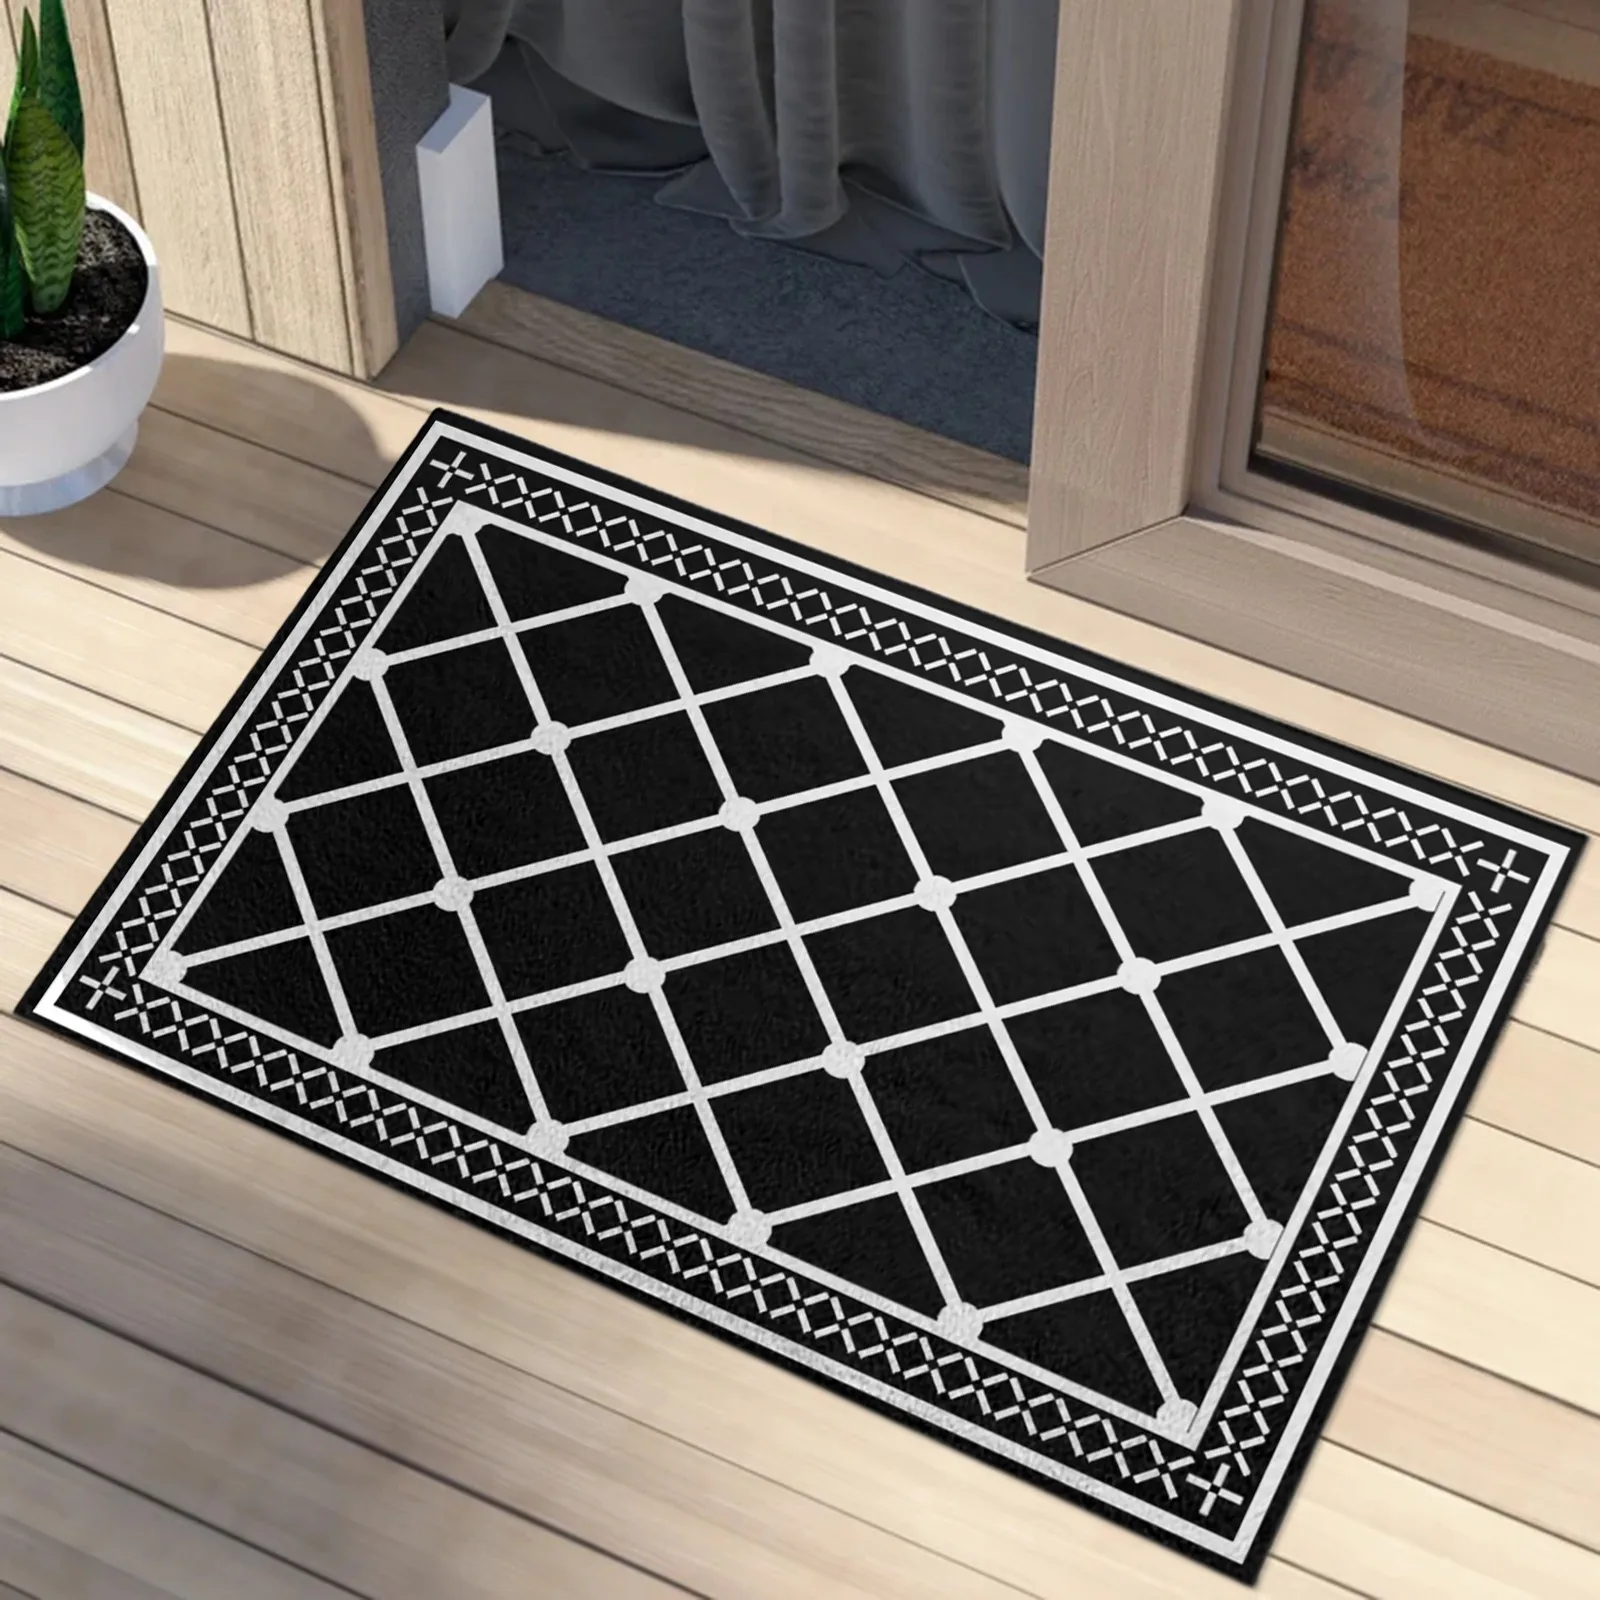 Details about   Luck Cat Doormat Floor Mat Non-Slip Carpet Rug Crystal Velvet Home Decor Vintage 